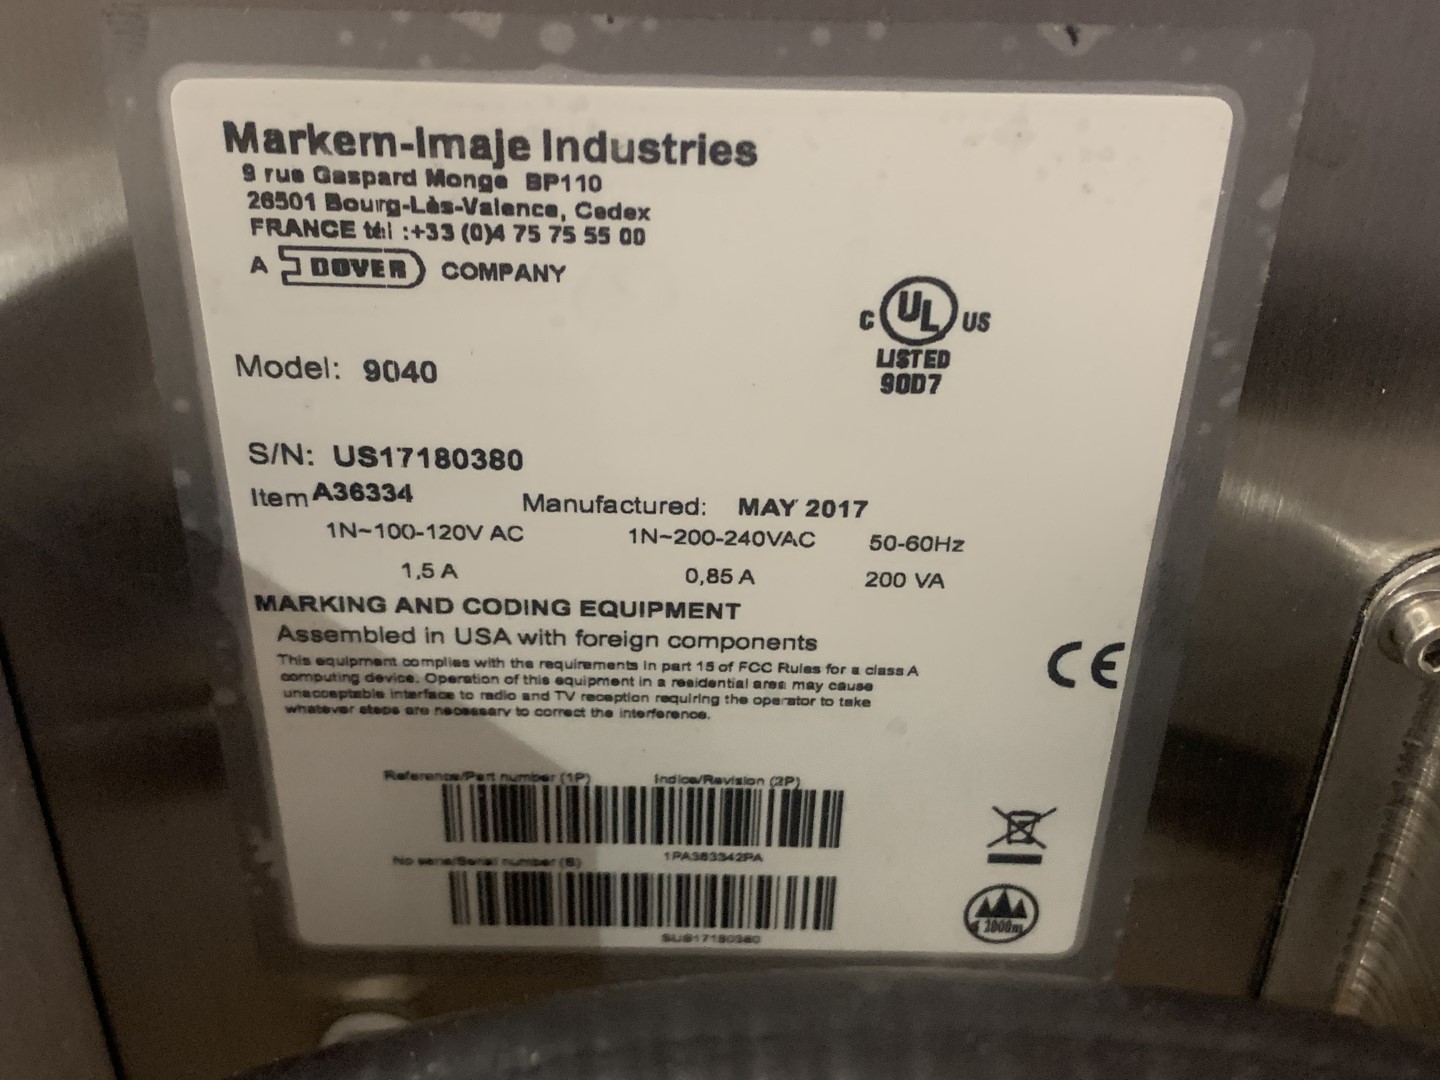 Markem Image Coder, Model 9040